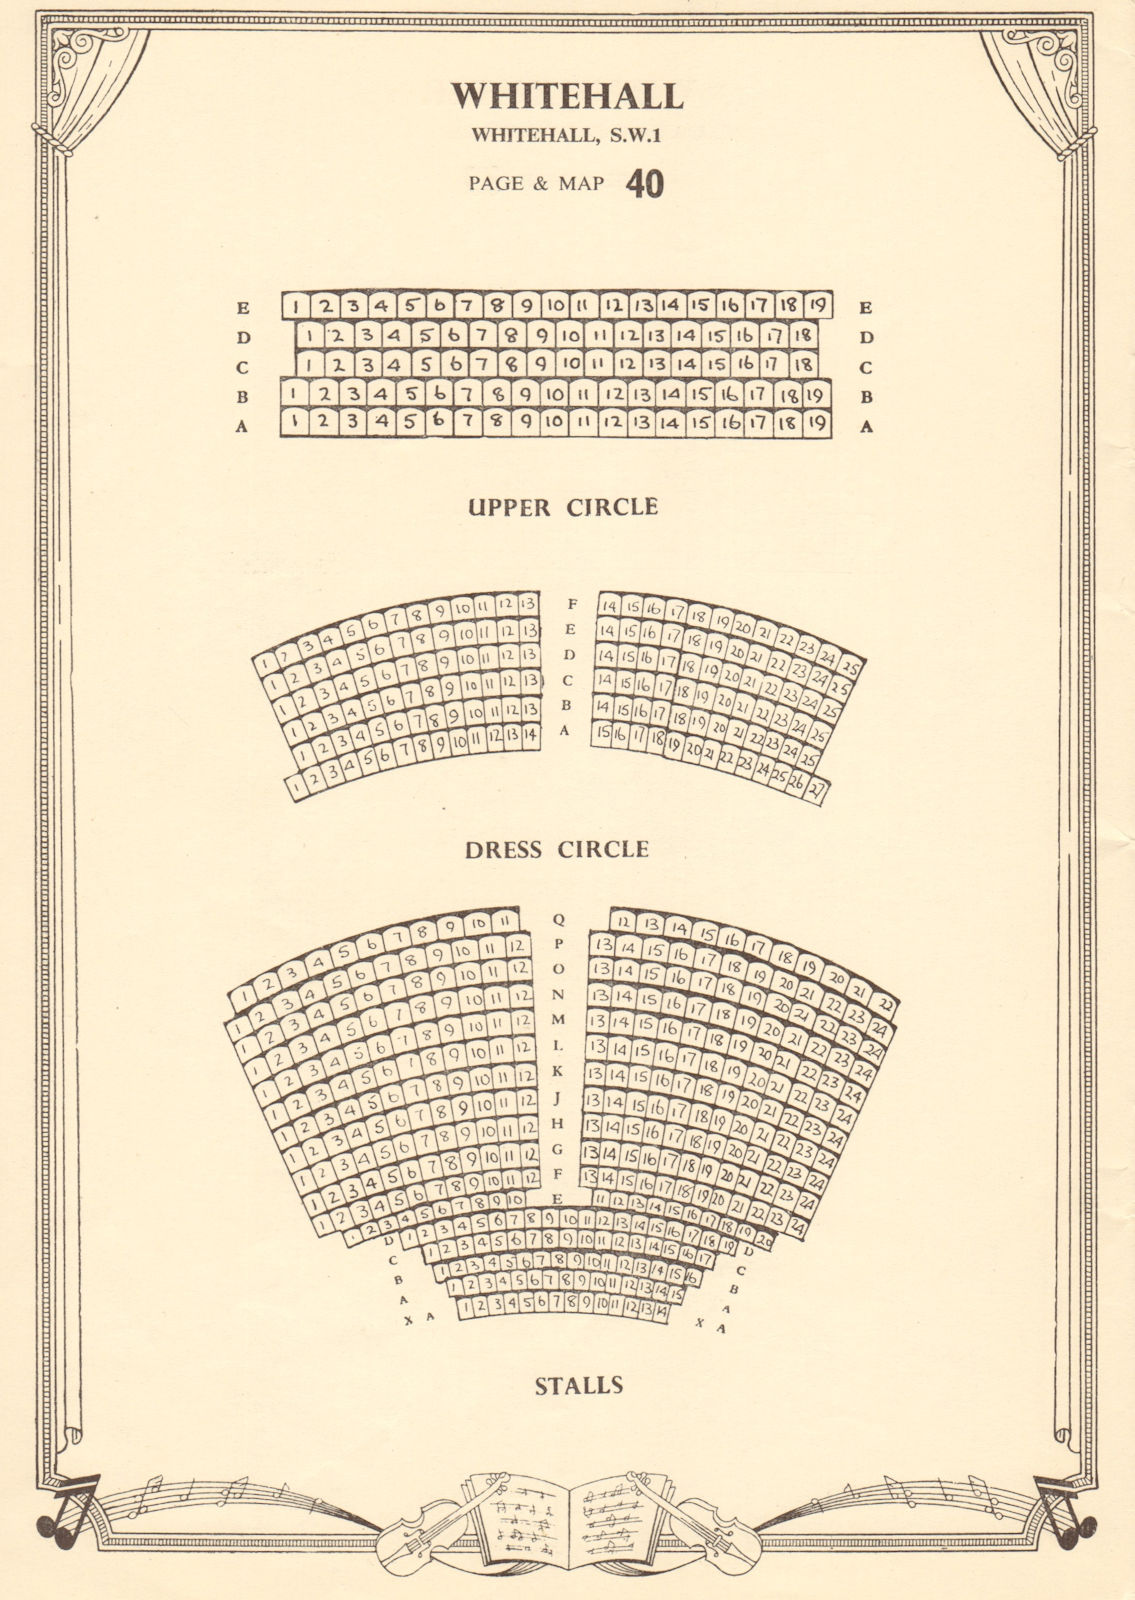 Associate Product Whitehall Theatre (Trafalgar Studios), Tra. Square. Vintage seating plan c1955